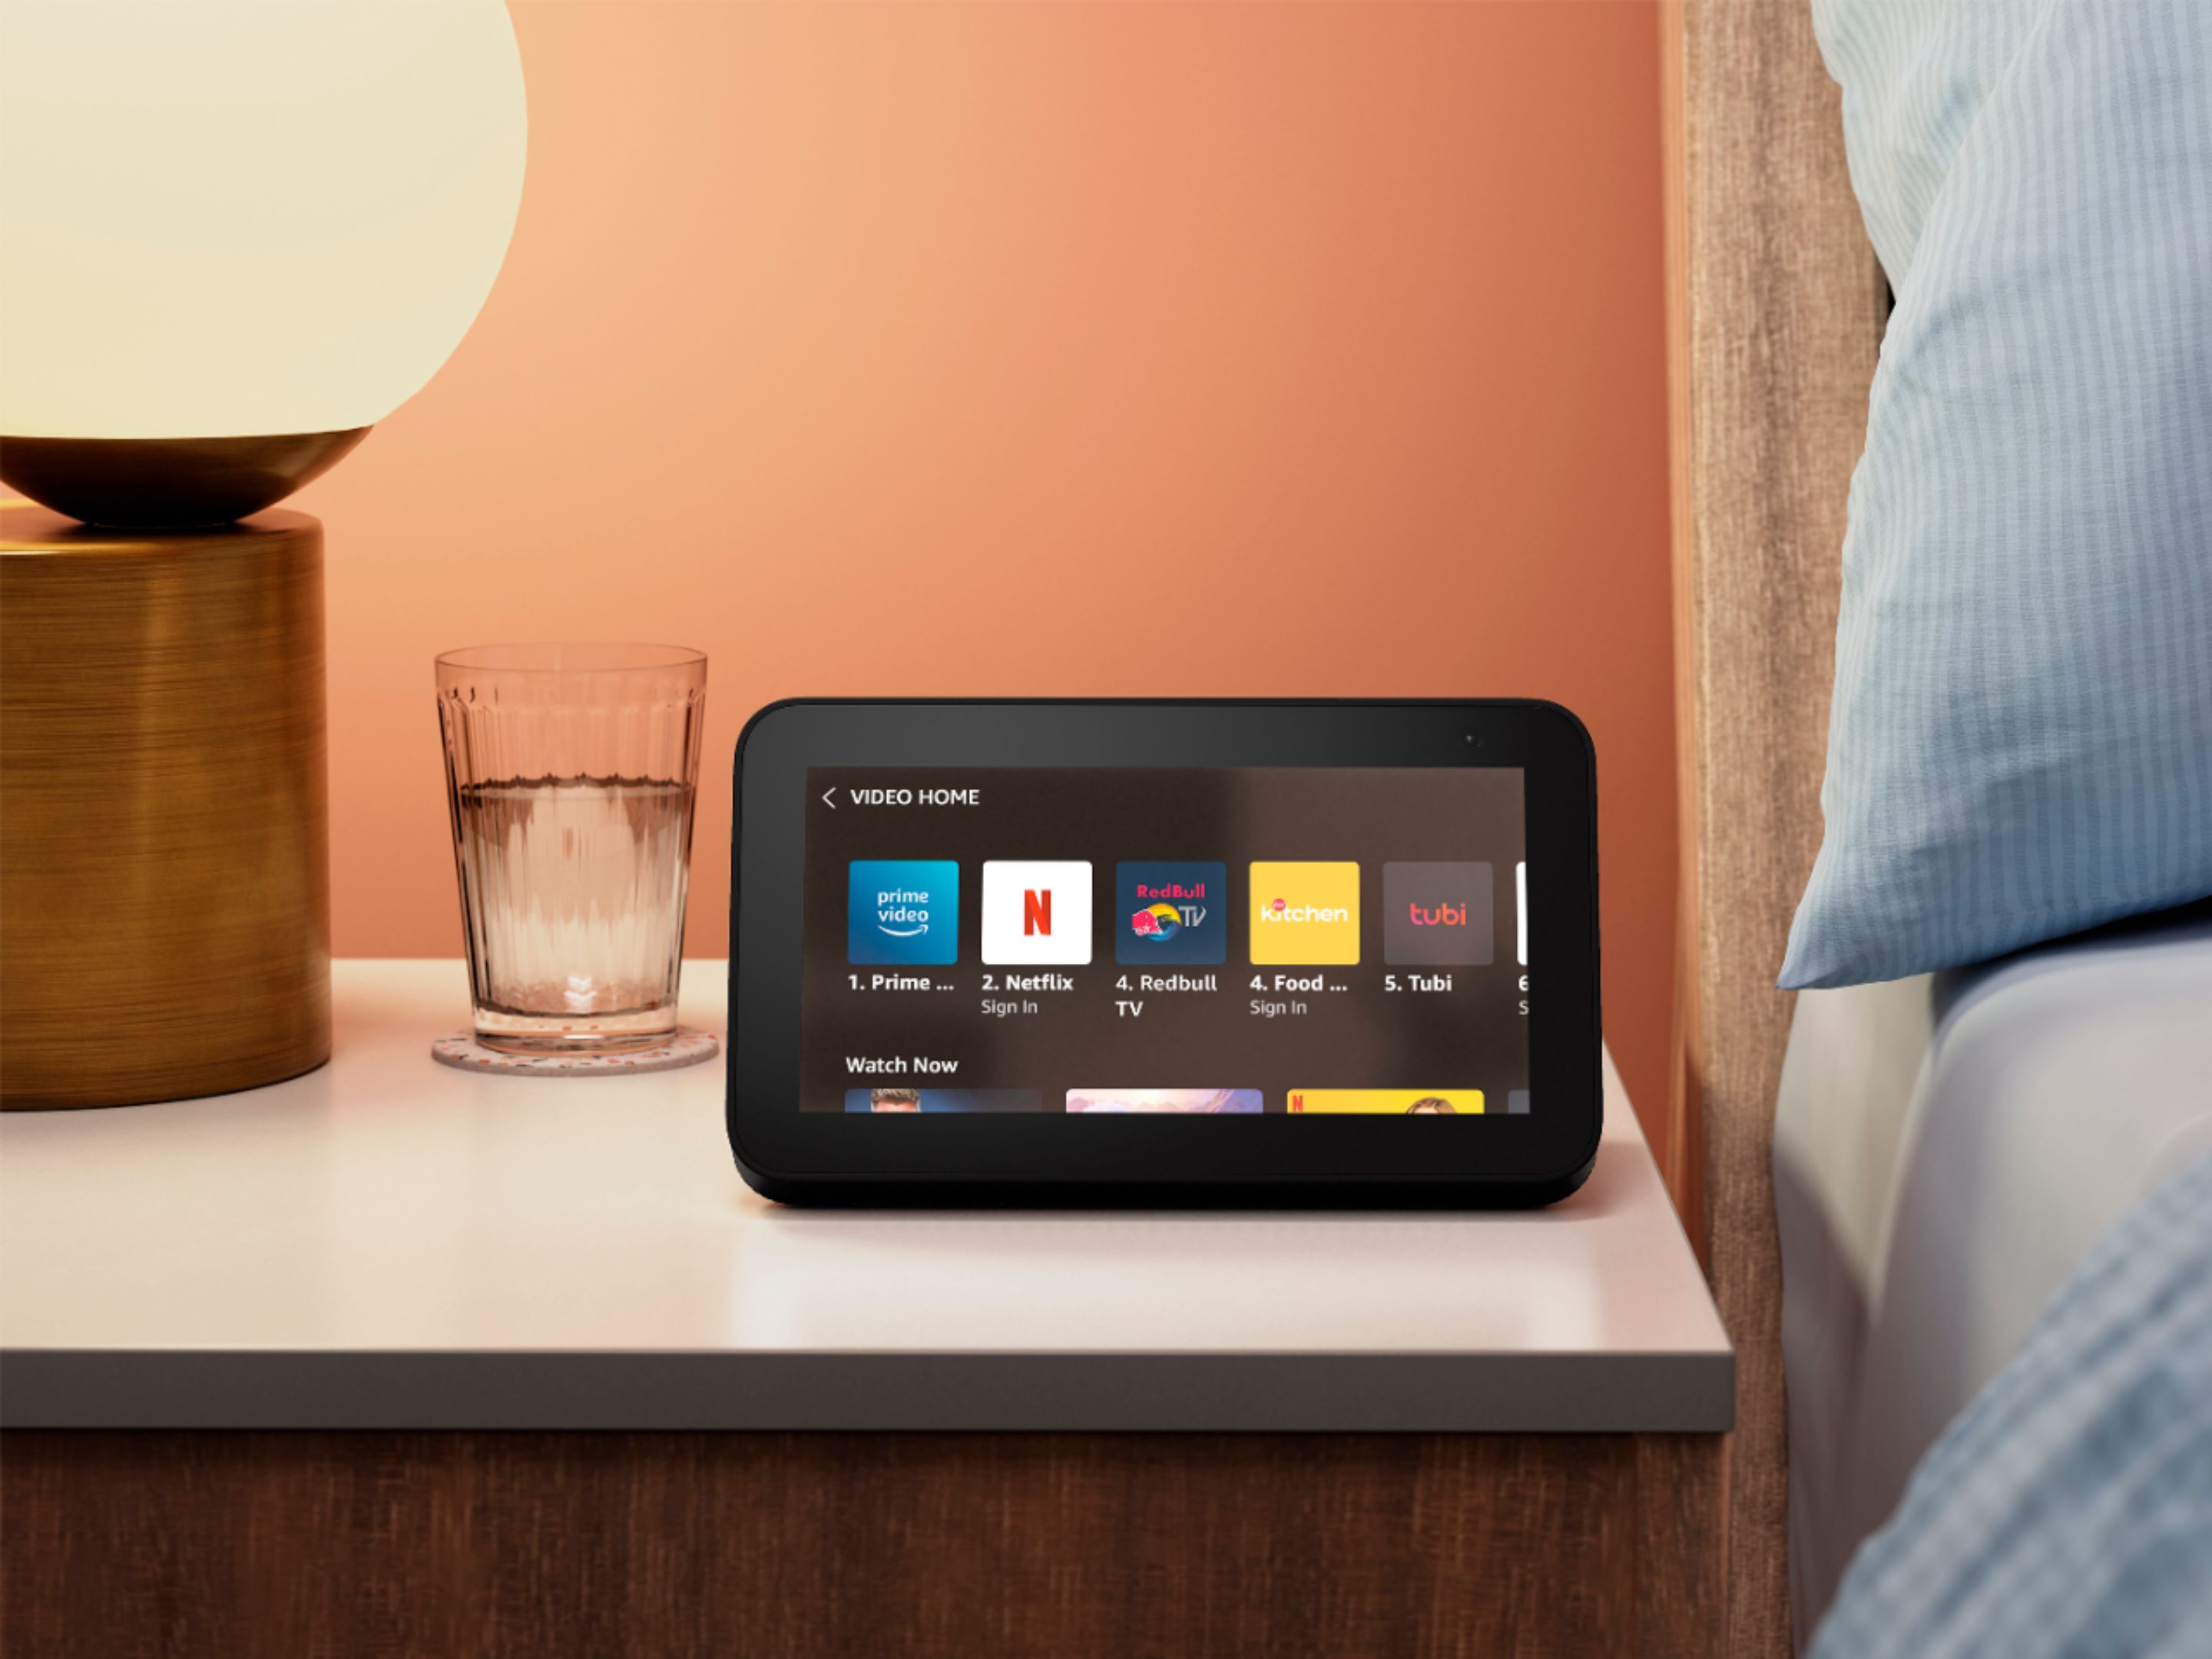 Amazon Echo Show 5 (2nd Gen, 2021 release) | Smart display with 